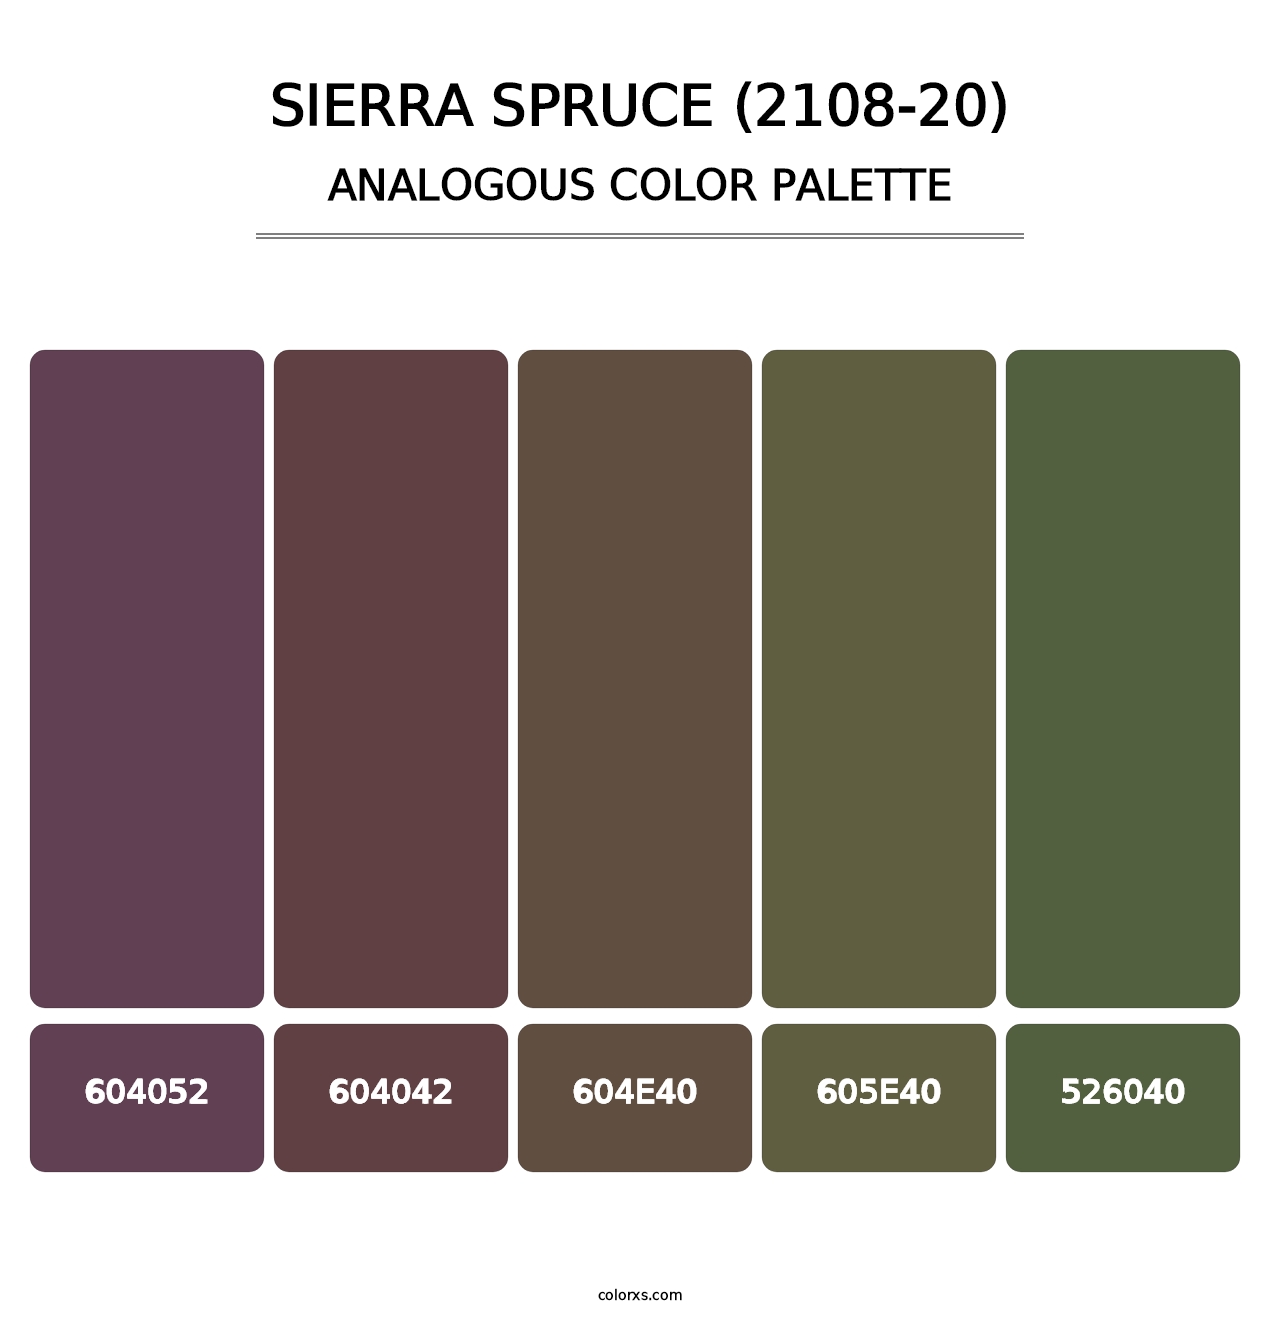 Sierra Spruce (2108-20) - Analogous Color Palette